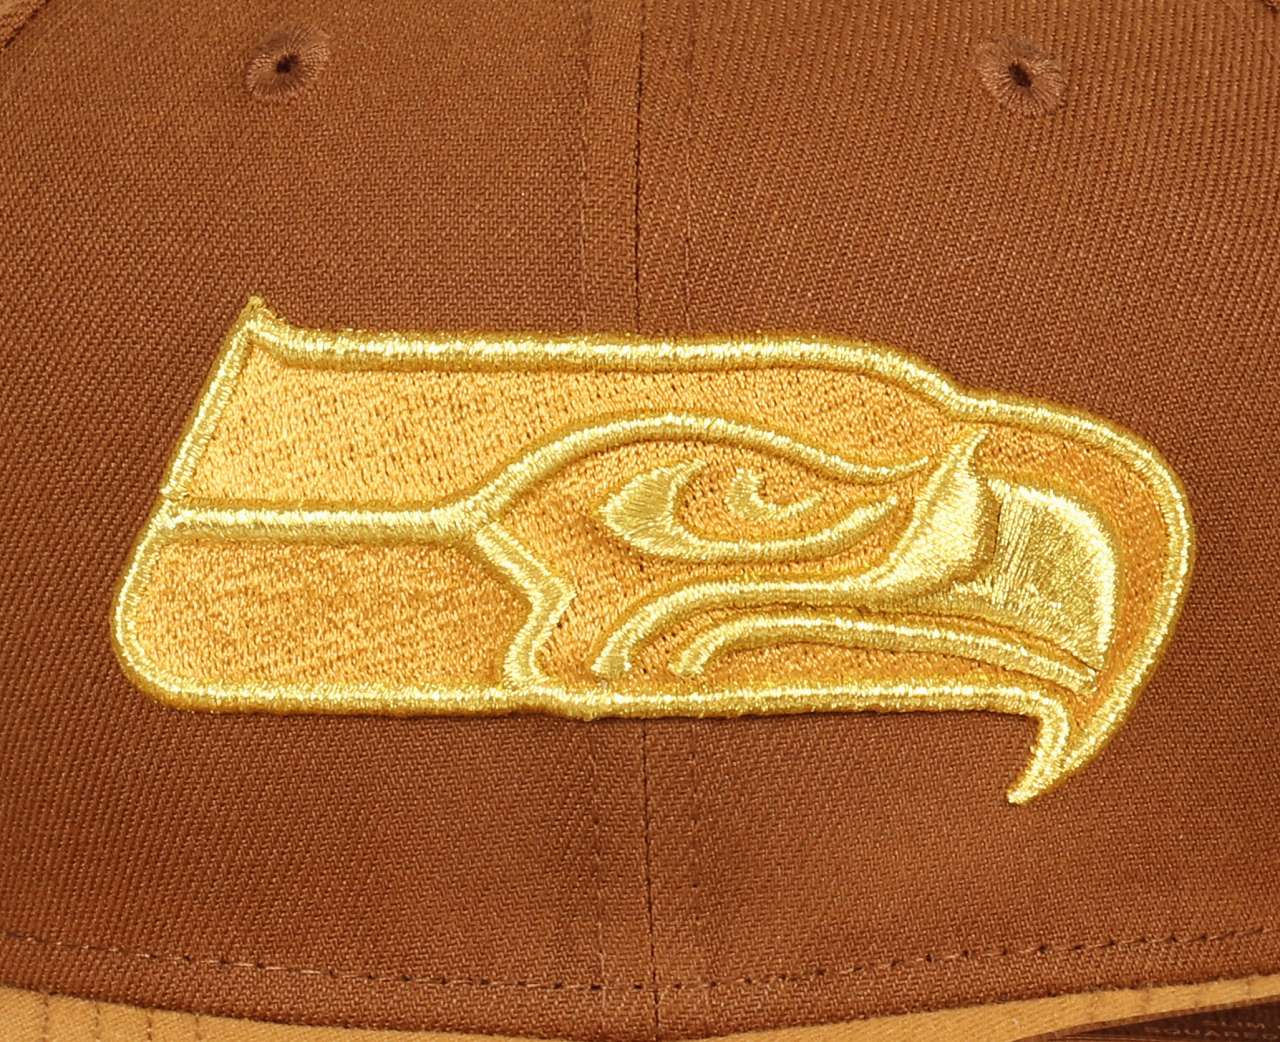 Seattle Seahawks NFLTwo Tone Toasted Peanut Gold 9Fifty Original Fit Snapback Cap New Era